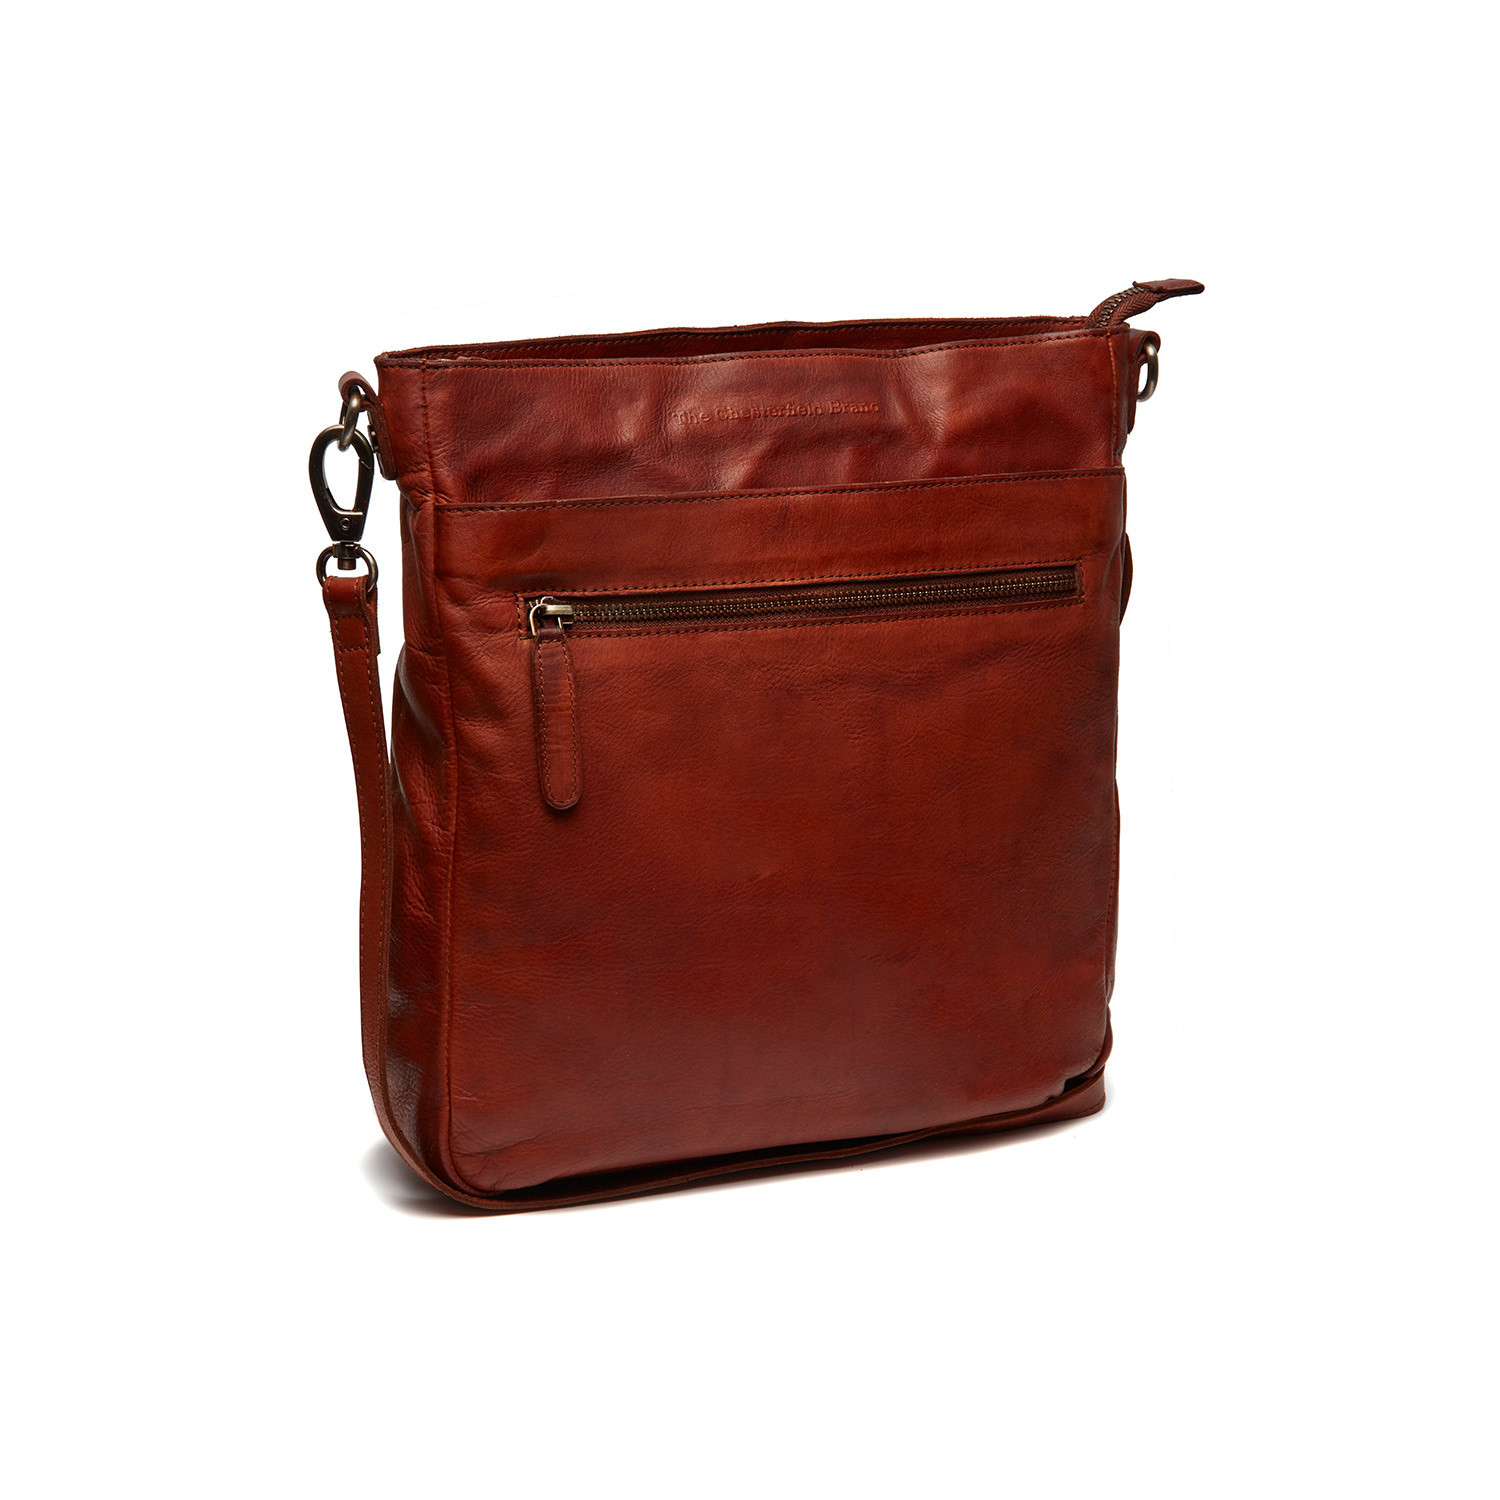 Leather Shoulder Bag Cognac Tucson Black Label - The Chesterfield Brand